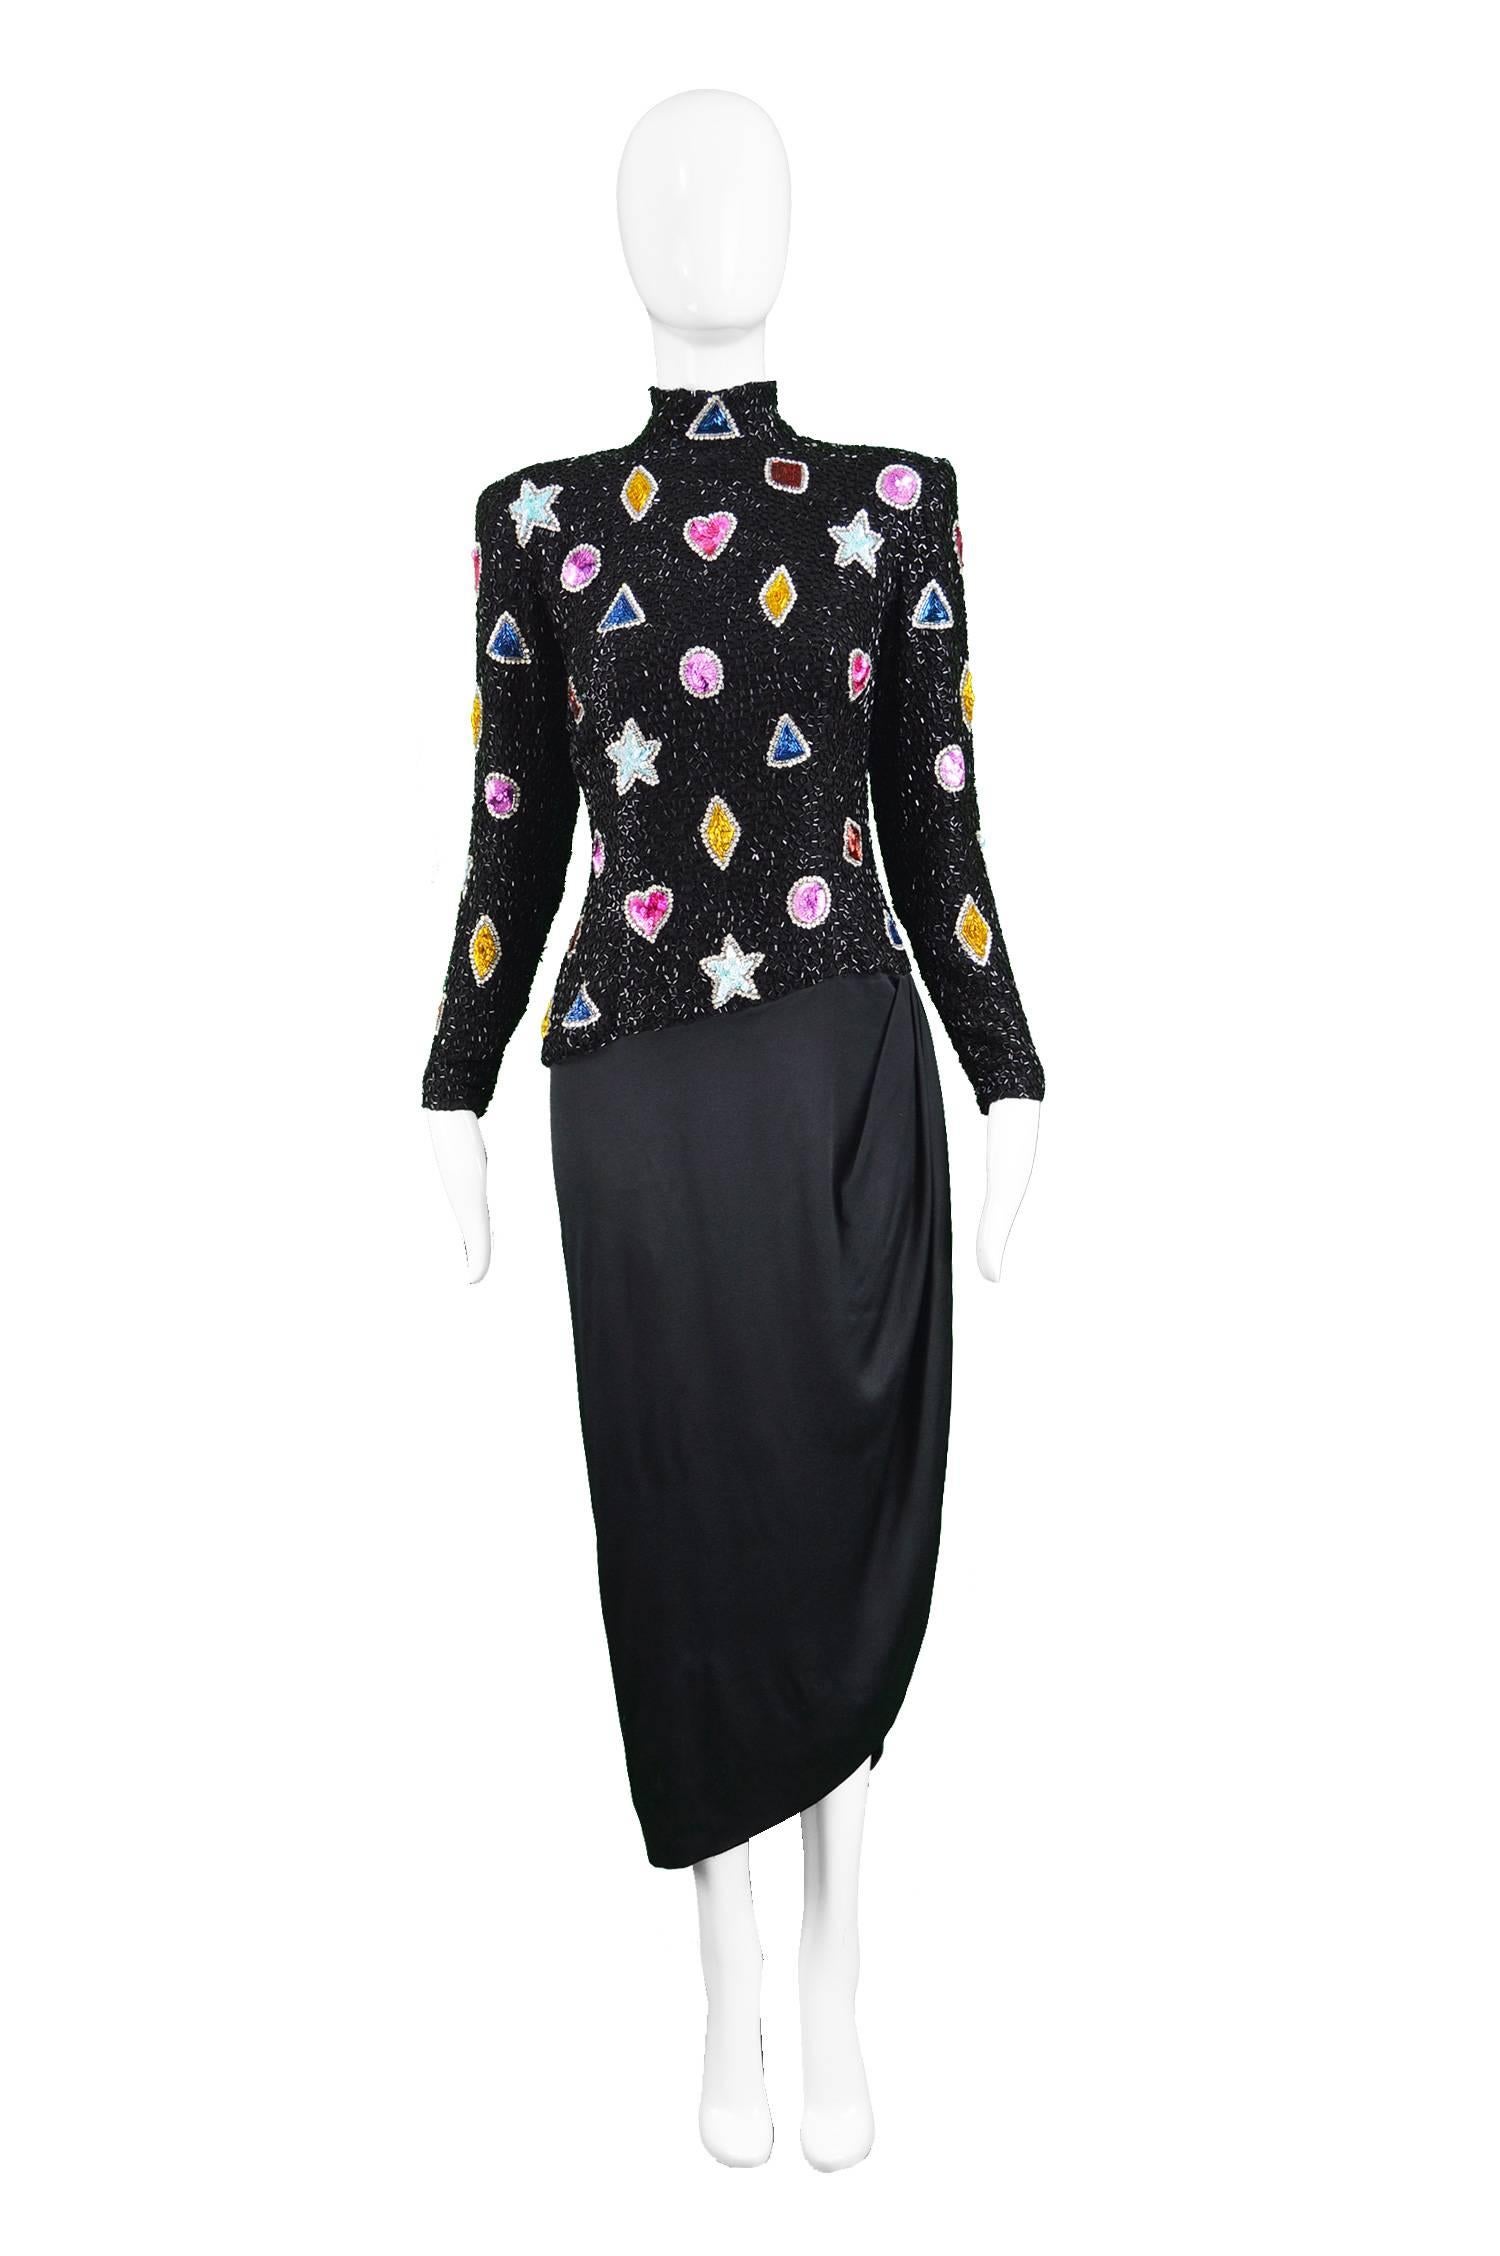 Bob Mackie Glam Vintage Long Sleeve Beaded Silk Evening Gown, 1980s

Estimated Size: UK 8-10/ US 4-6/ EU 36-38. Please check measurements.
Bust - 34” / 86cm
Waist - 27” / 68cm
Hips - 36” / 91cm
Length (Shoulder to Hem) - 50” / 127cm
Shoulder to